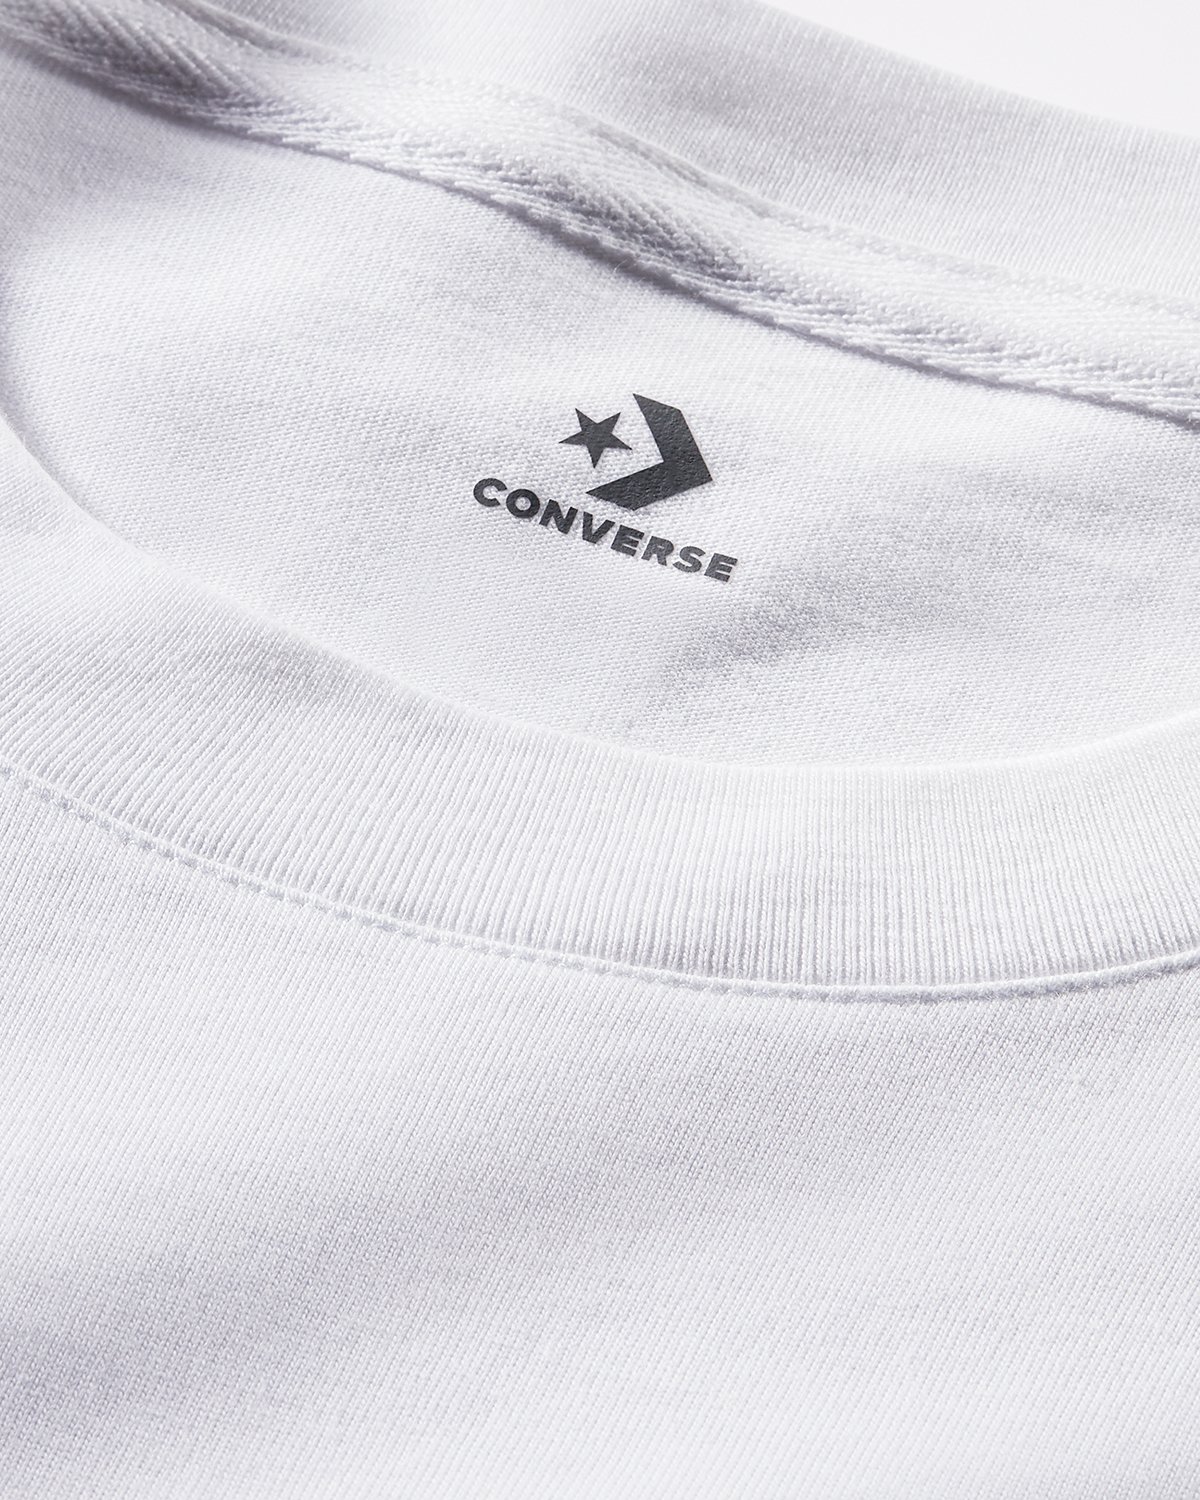 Converse x Joshua Vides - Long Sleeve Pocket Tee White - Clothing - White - Image 6